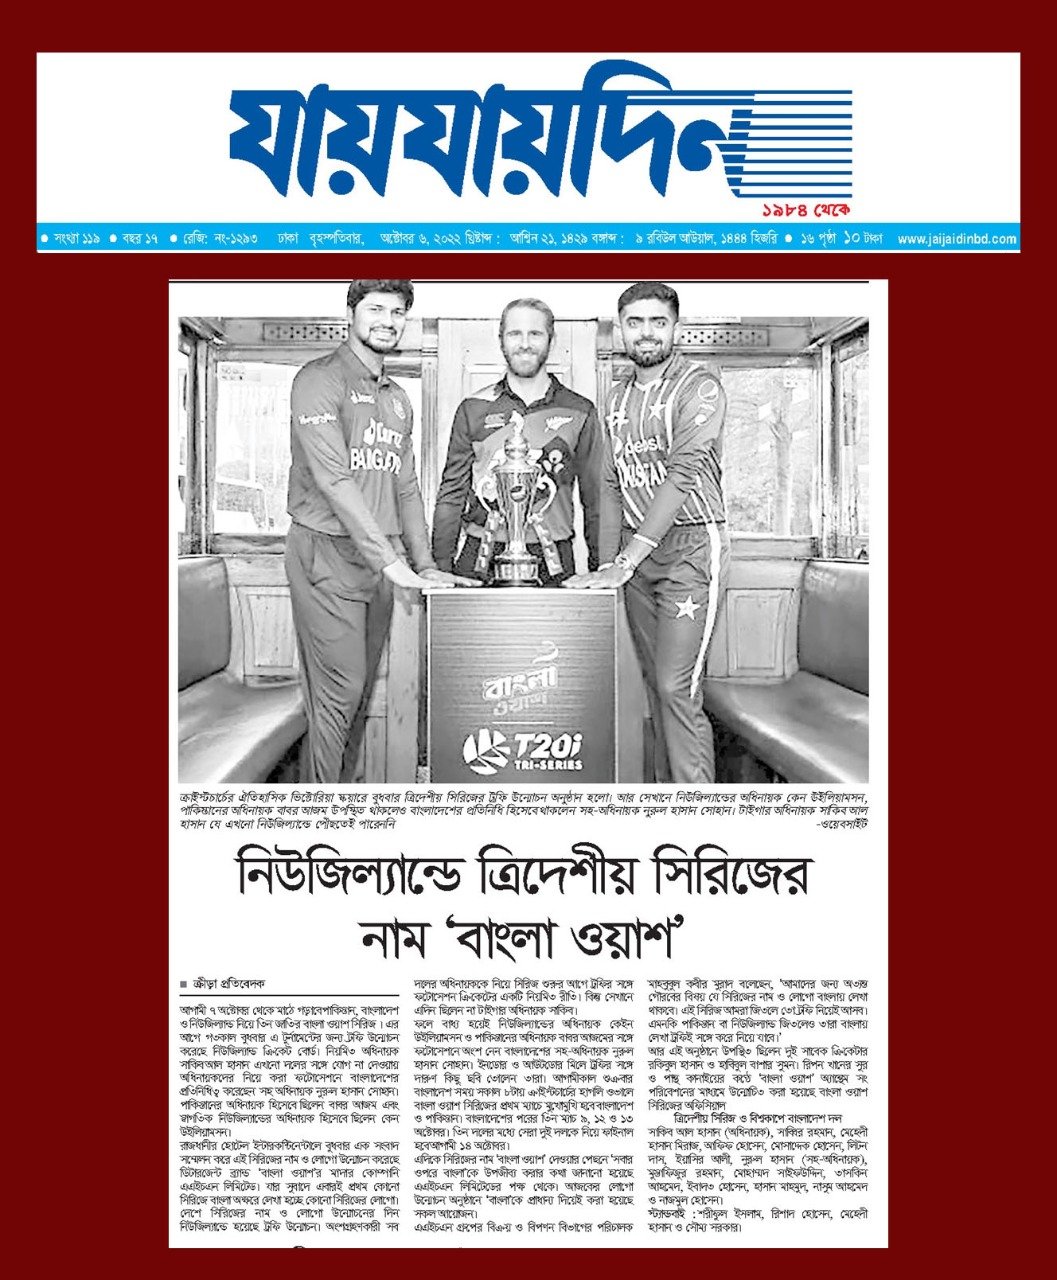 Jaijai din Bangla Wash T20i Tri-Series 2022